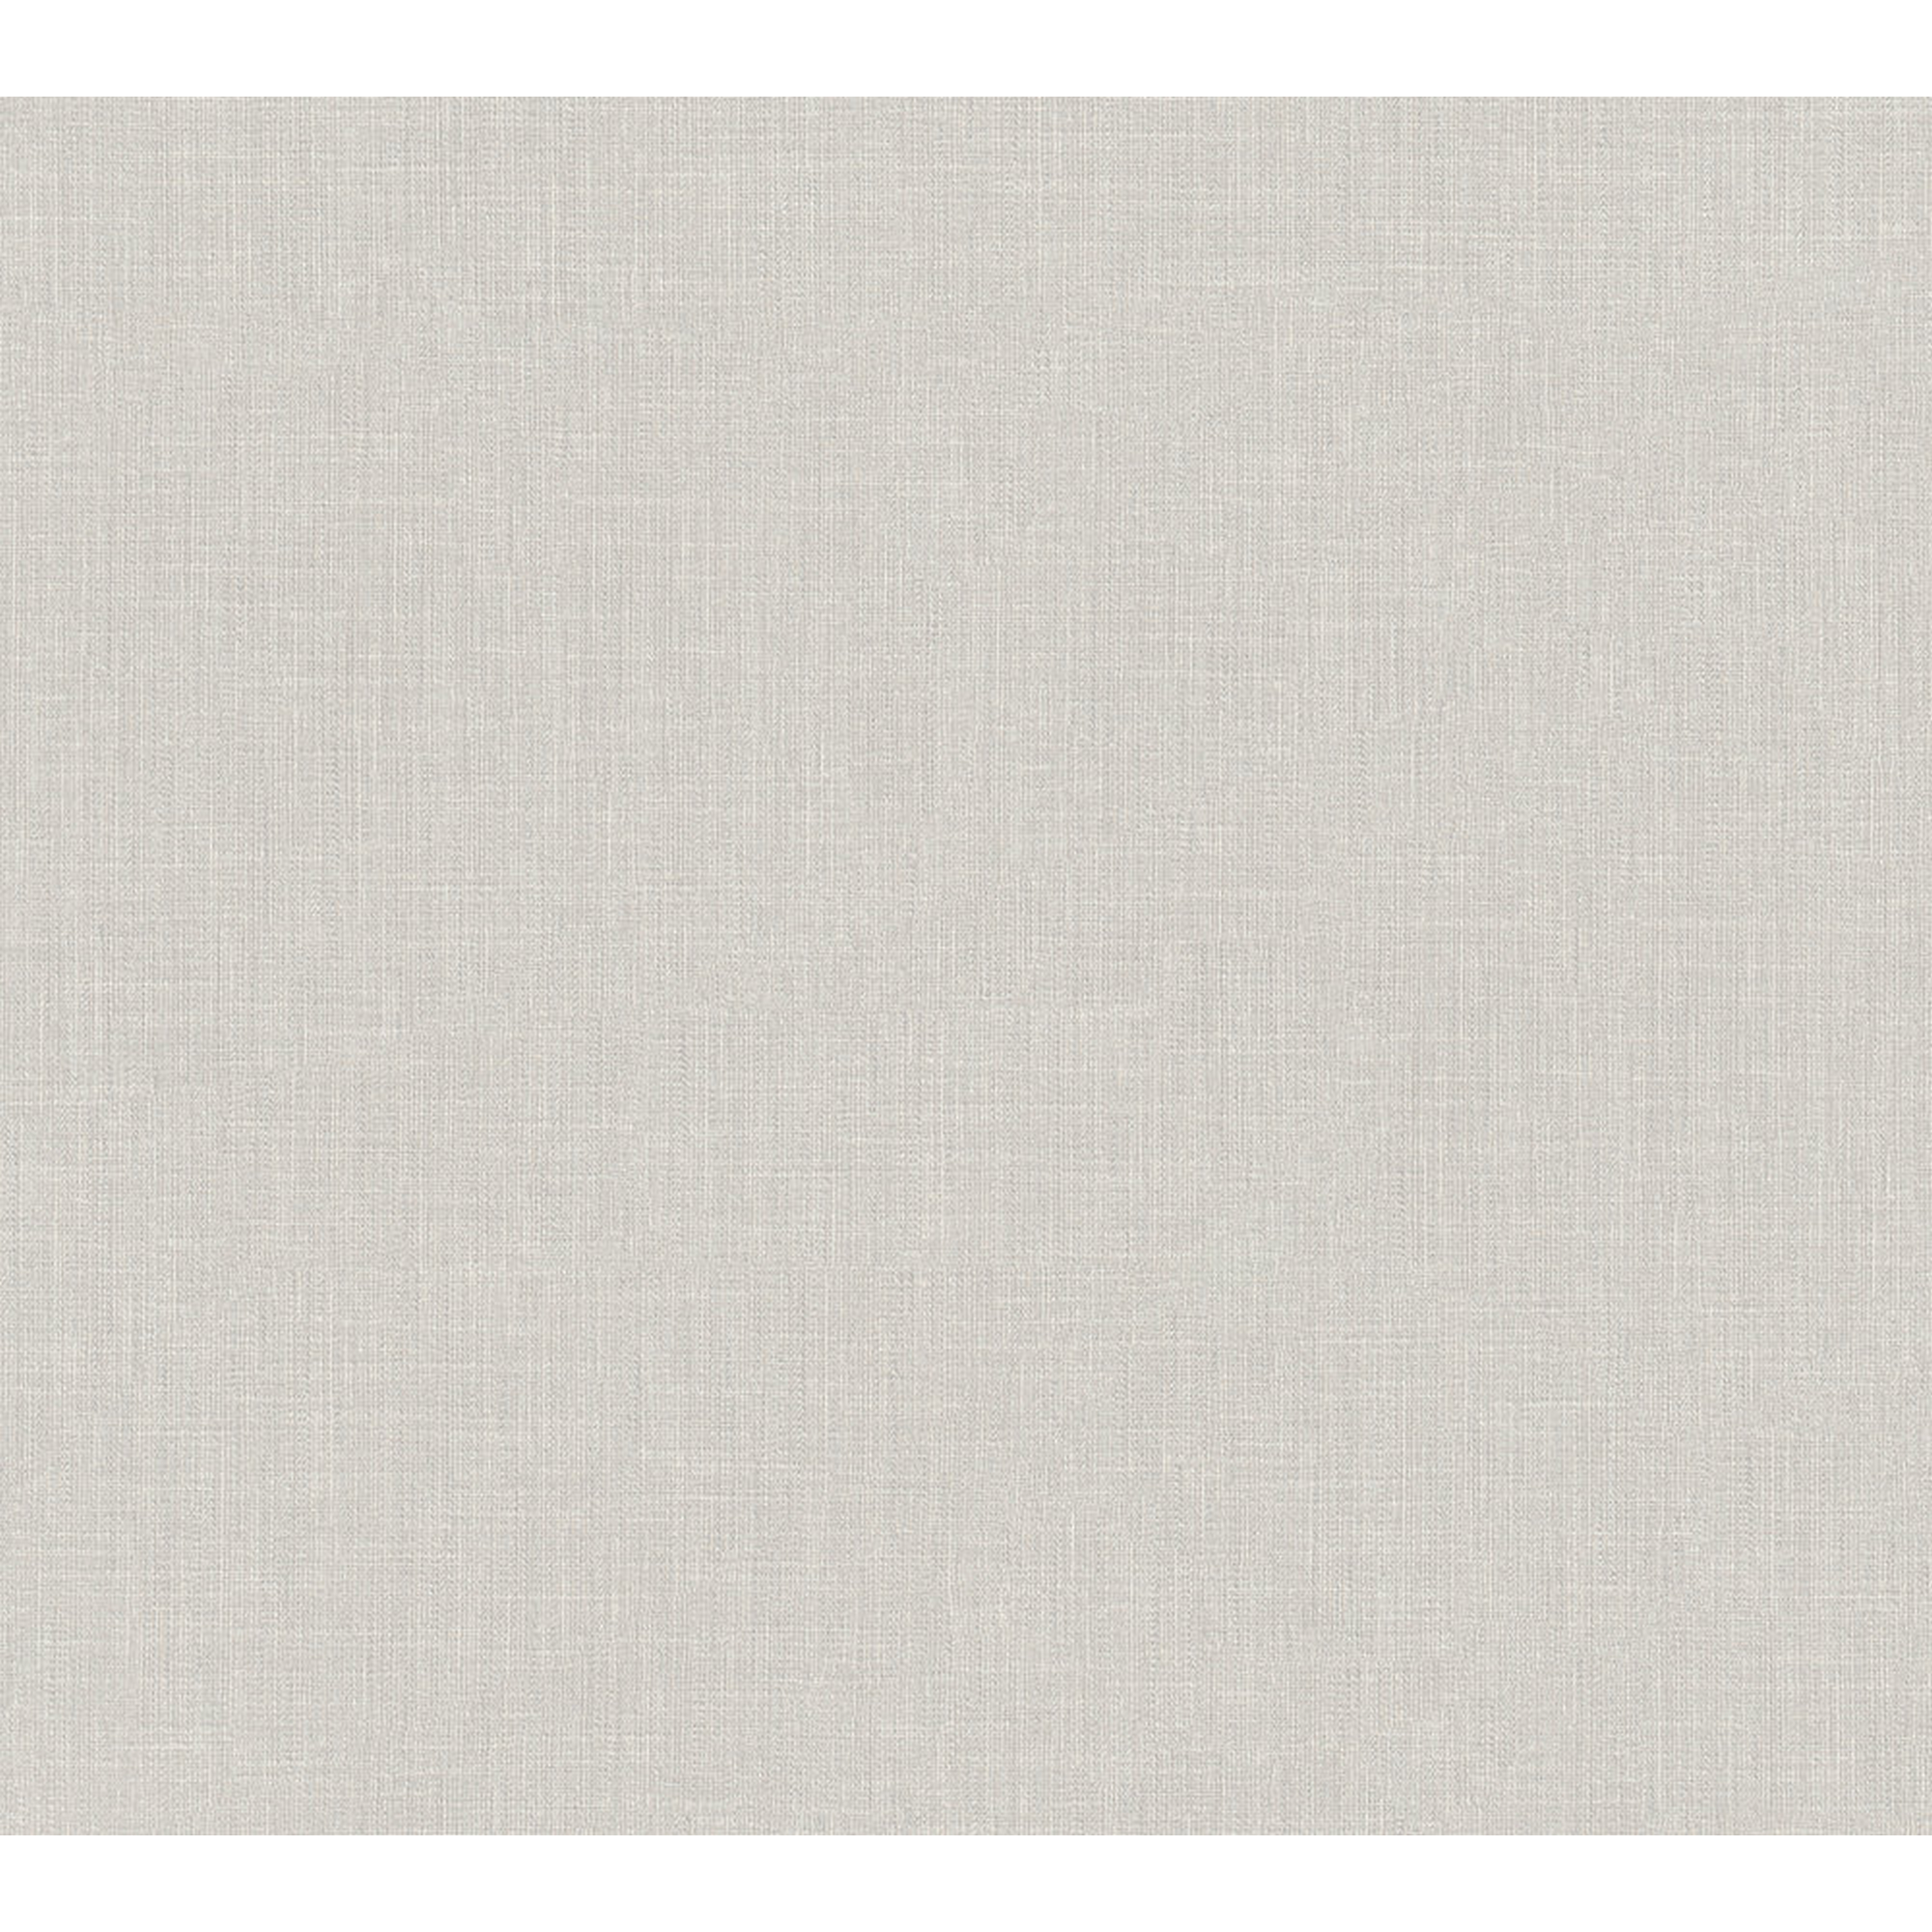 Vliestapete Metropolitan Stories 'Nils Olsson' Copenhagen, Uni Textiloptik graubeige 10,05 x 0,53 m + product picture